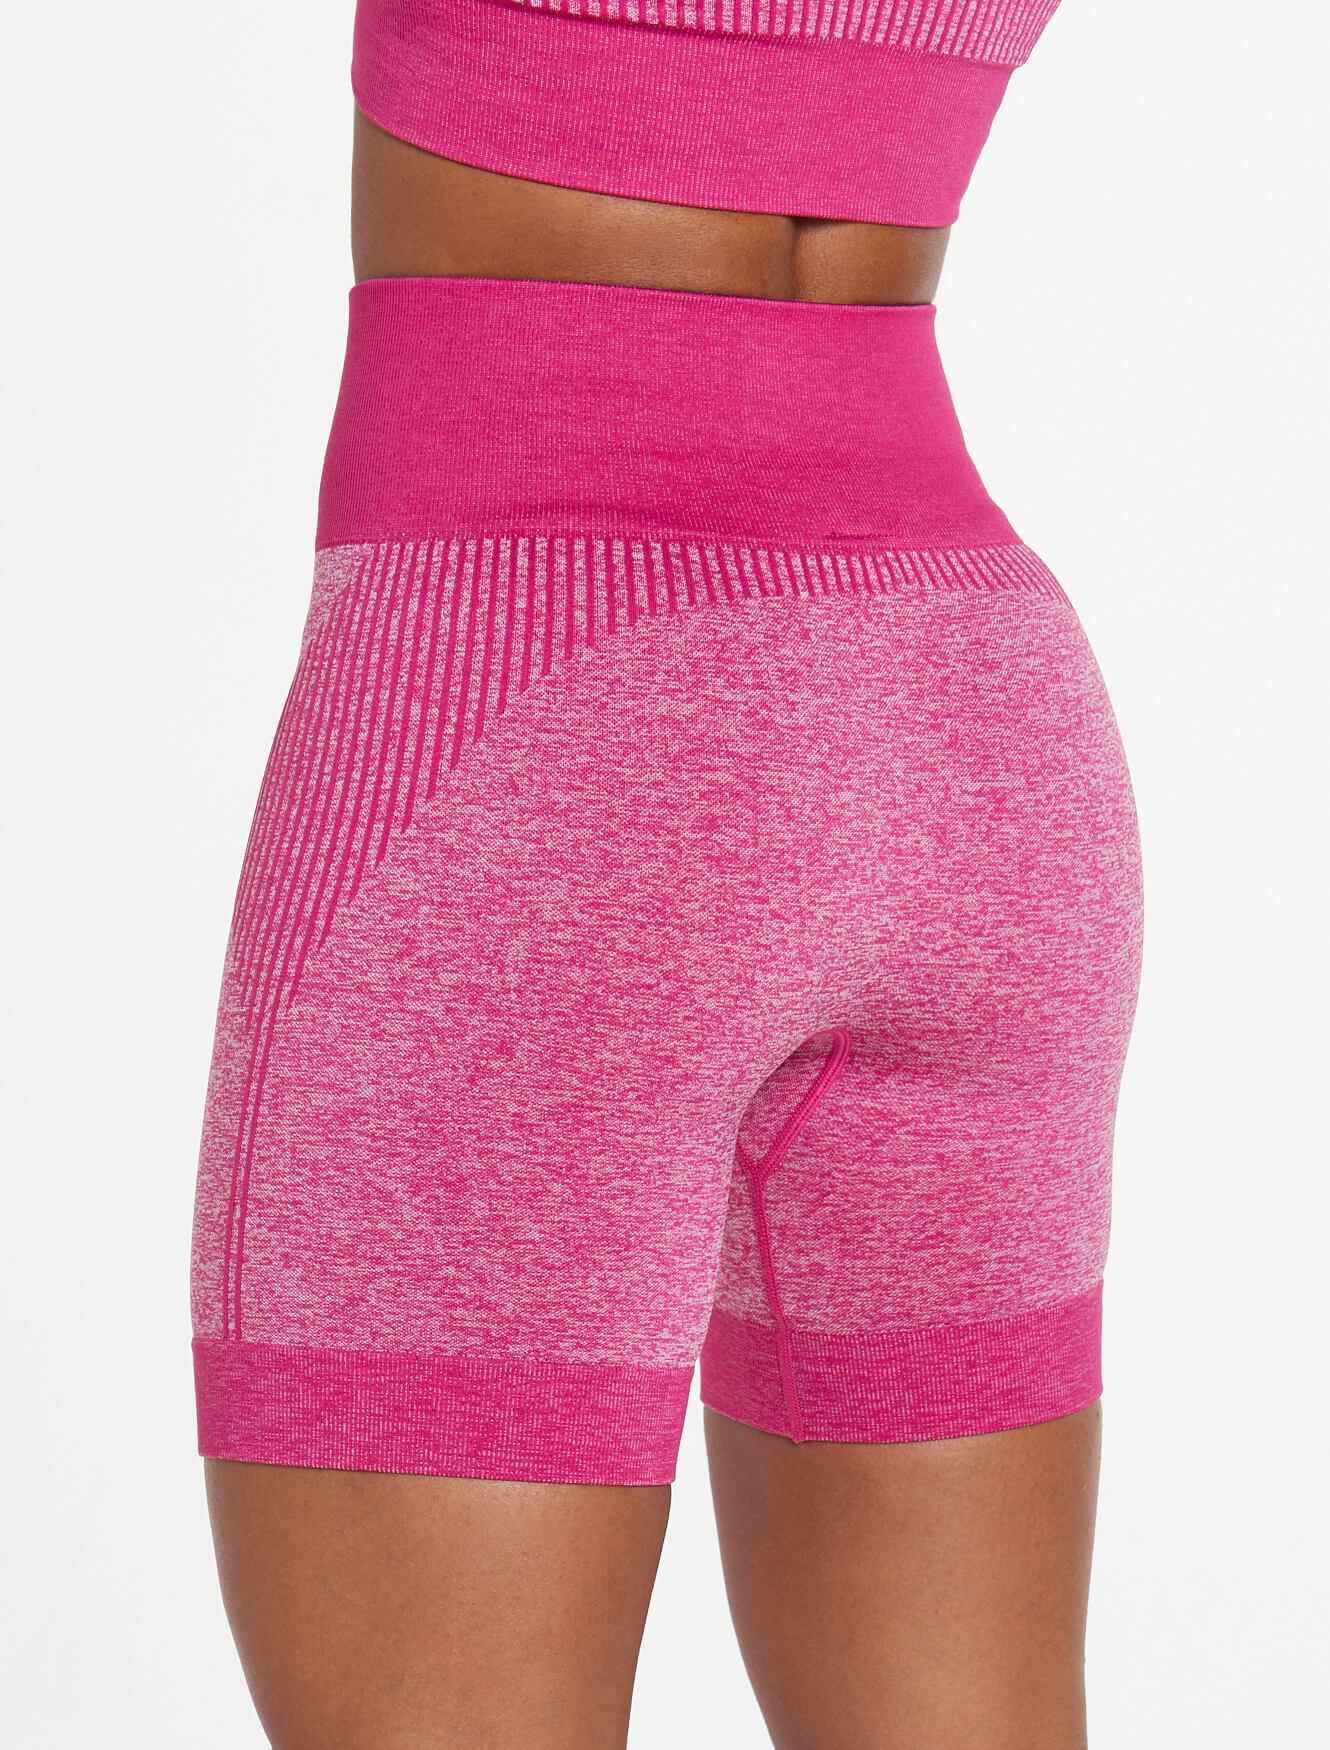 ADAPT Seamless Shorts / Power Pink Pursue Fitness 5